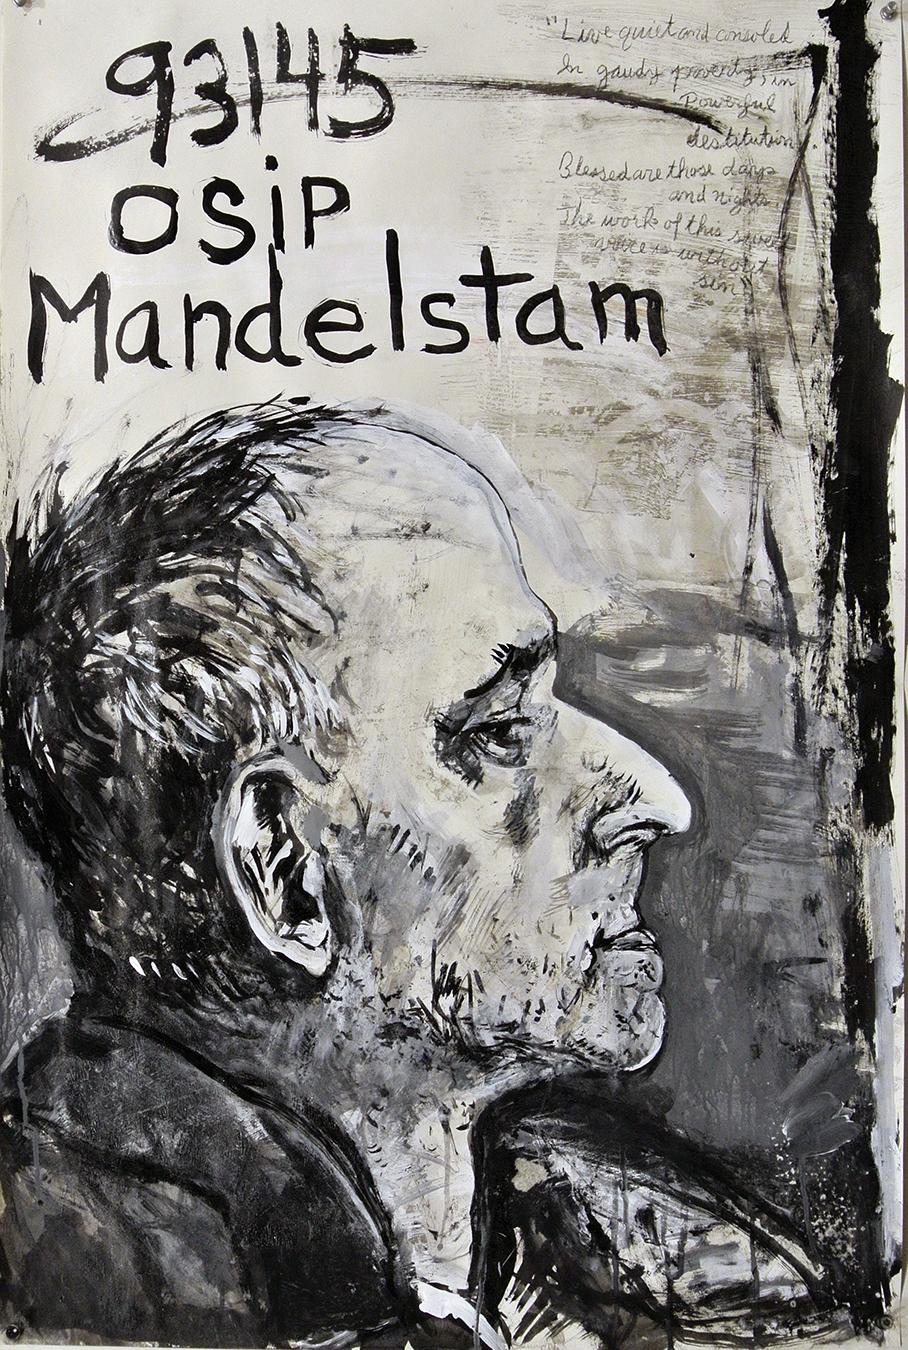 Dale Williams Portrait Painting - "Osip Mandelstam", acrylic painting, portrait, political exile, poetry, resist